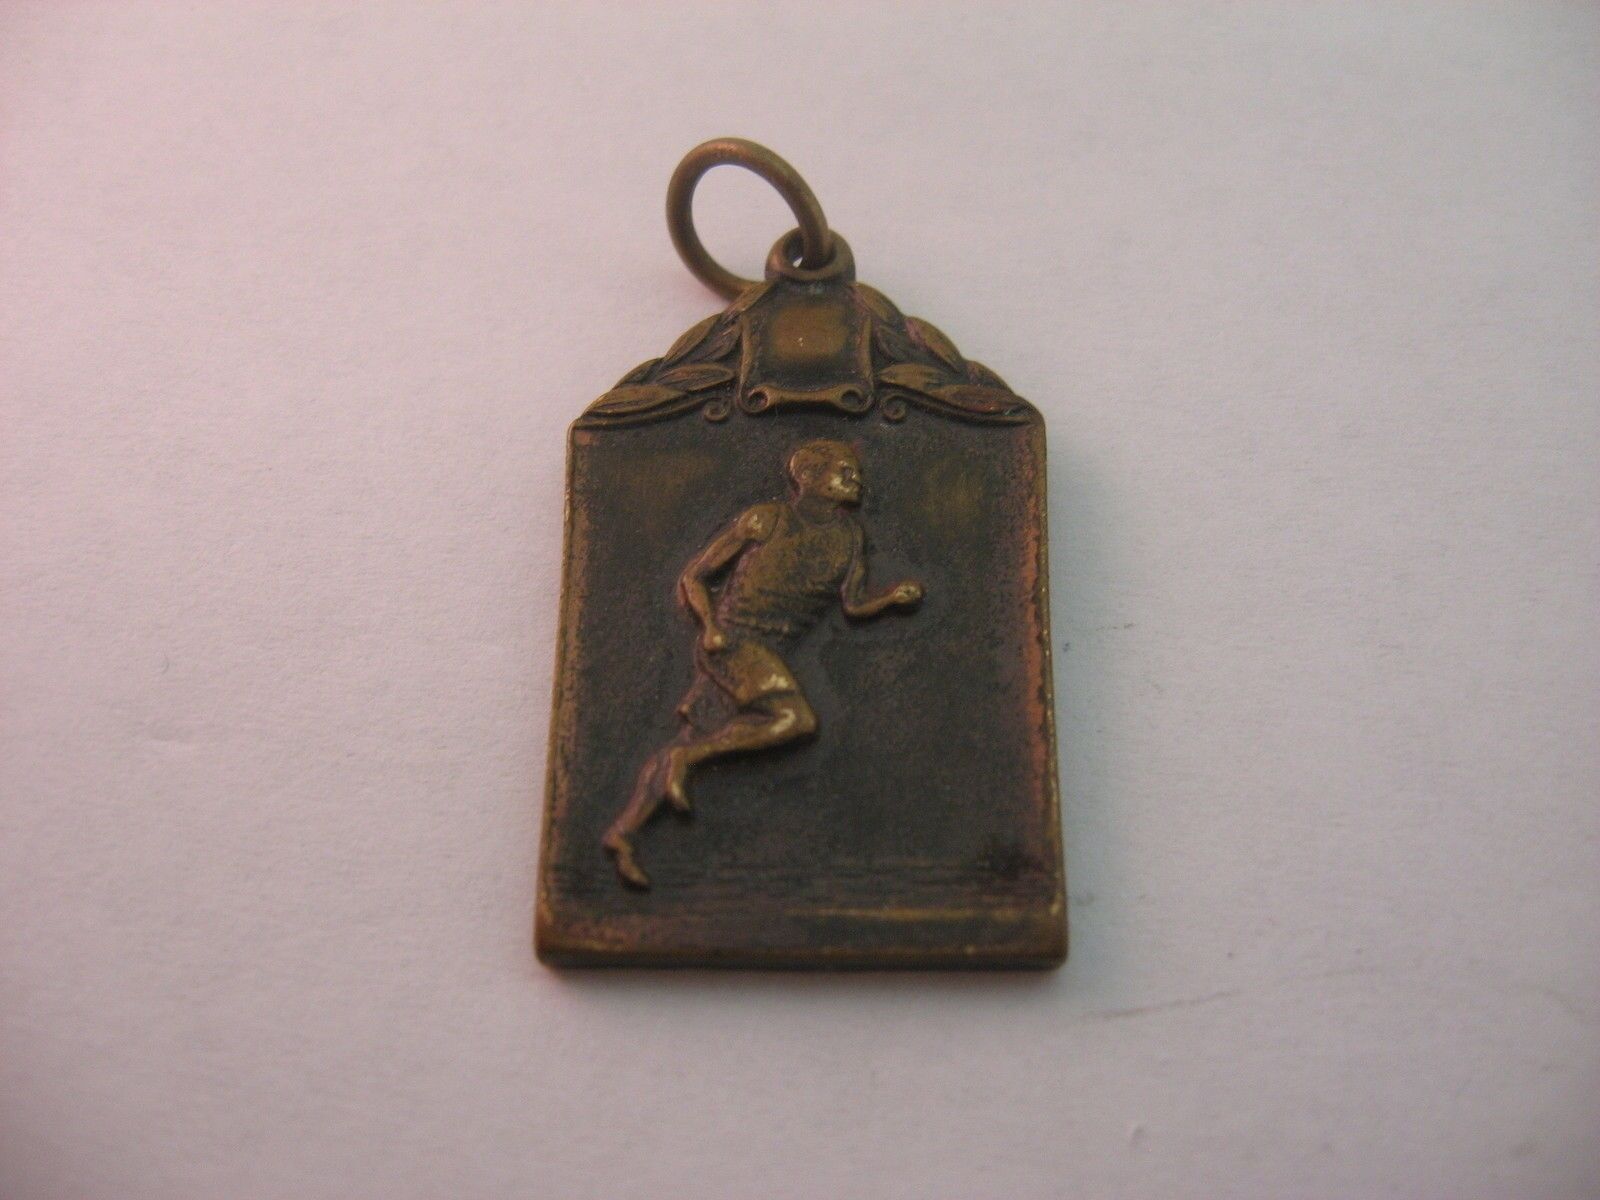 Vintage 1931 St. Louis County Track & Field Meet Hurdles Award Medal Charm